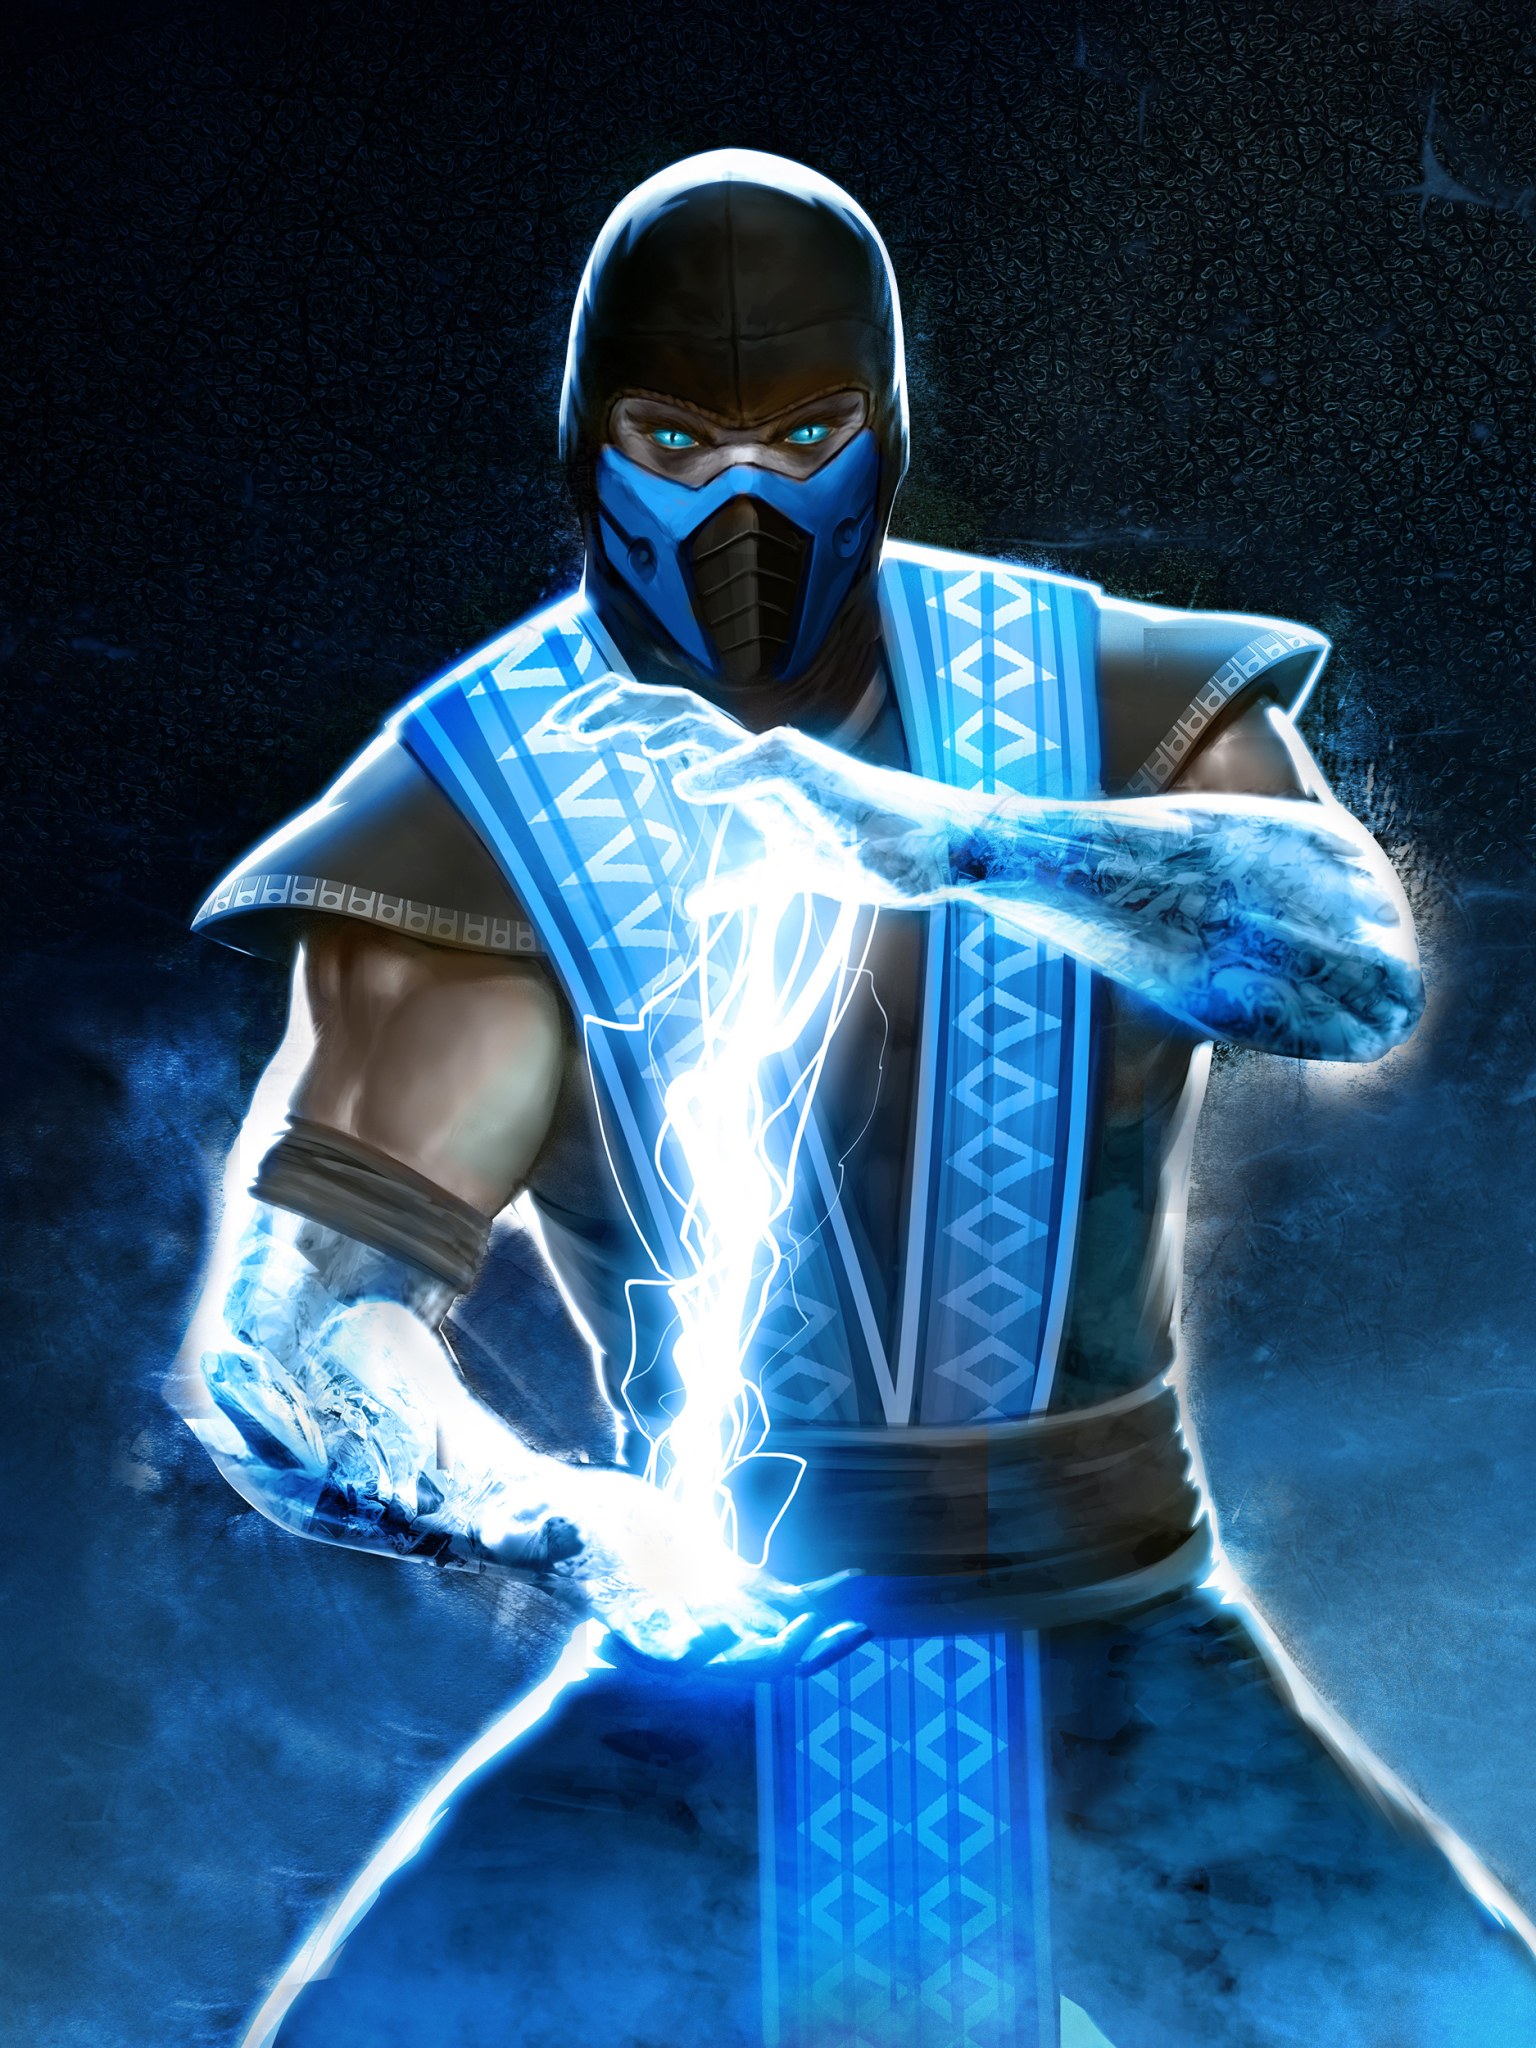 Descarga gratis la imagen Mortal Kombat, Videojuego, Sub Zero (Mortal Kombat) en el escritorio de tu PC